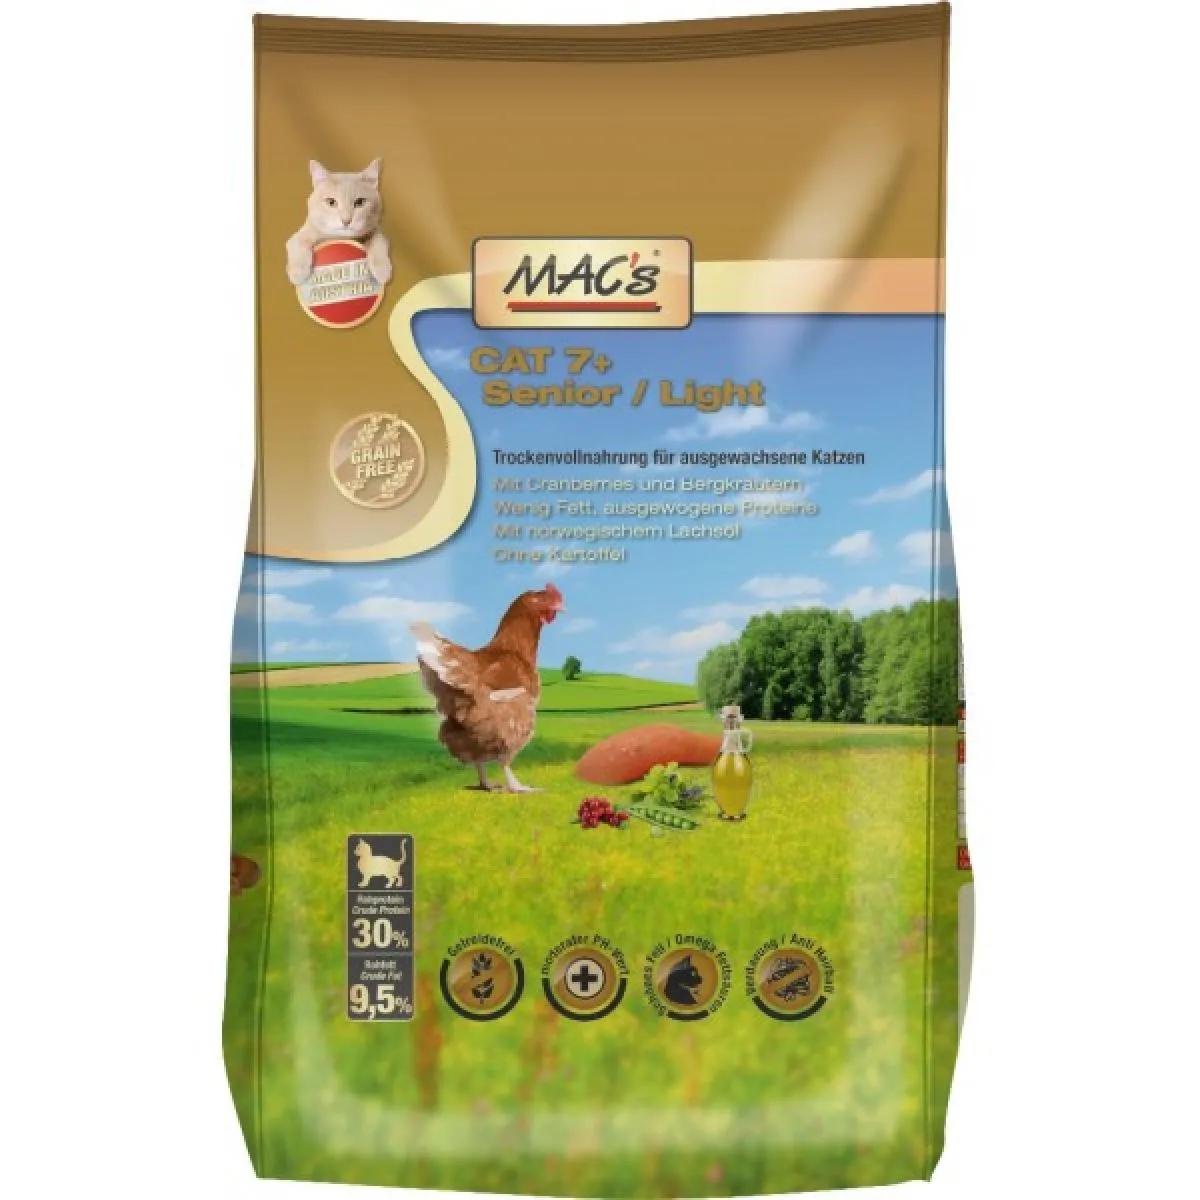 Mac’s 7+ Senior Chicken/ Light - Супер премиум суха храна за котки над 7 годишна възраст, без зърно , с пилешко месо, червена боровинка и картофи 300 гр.